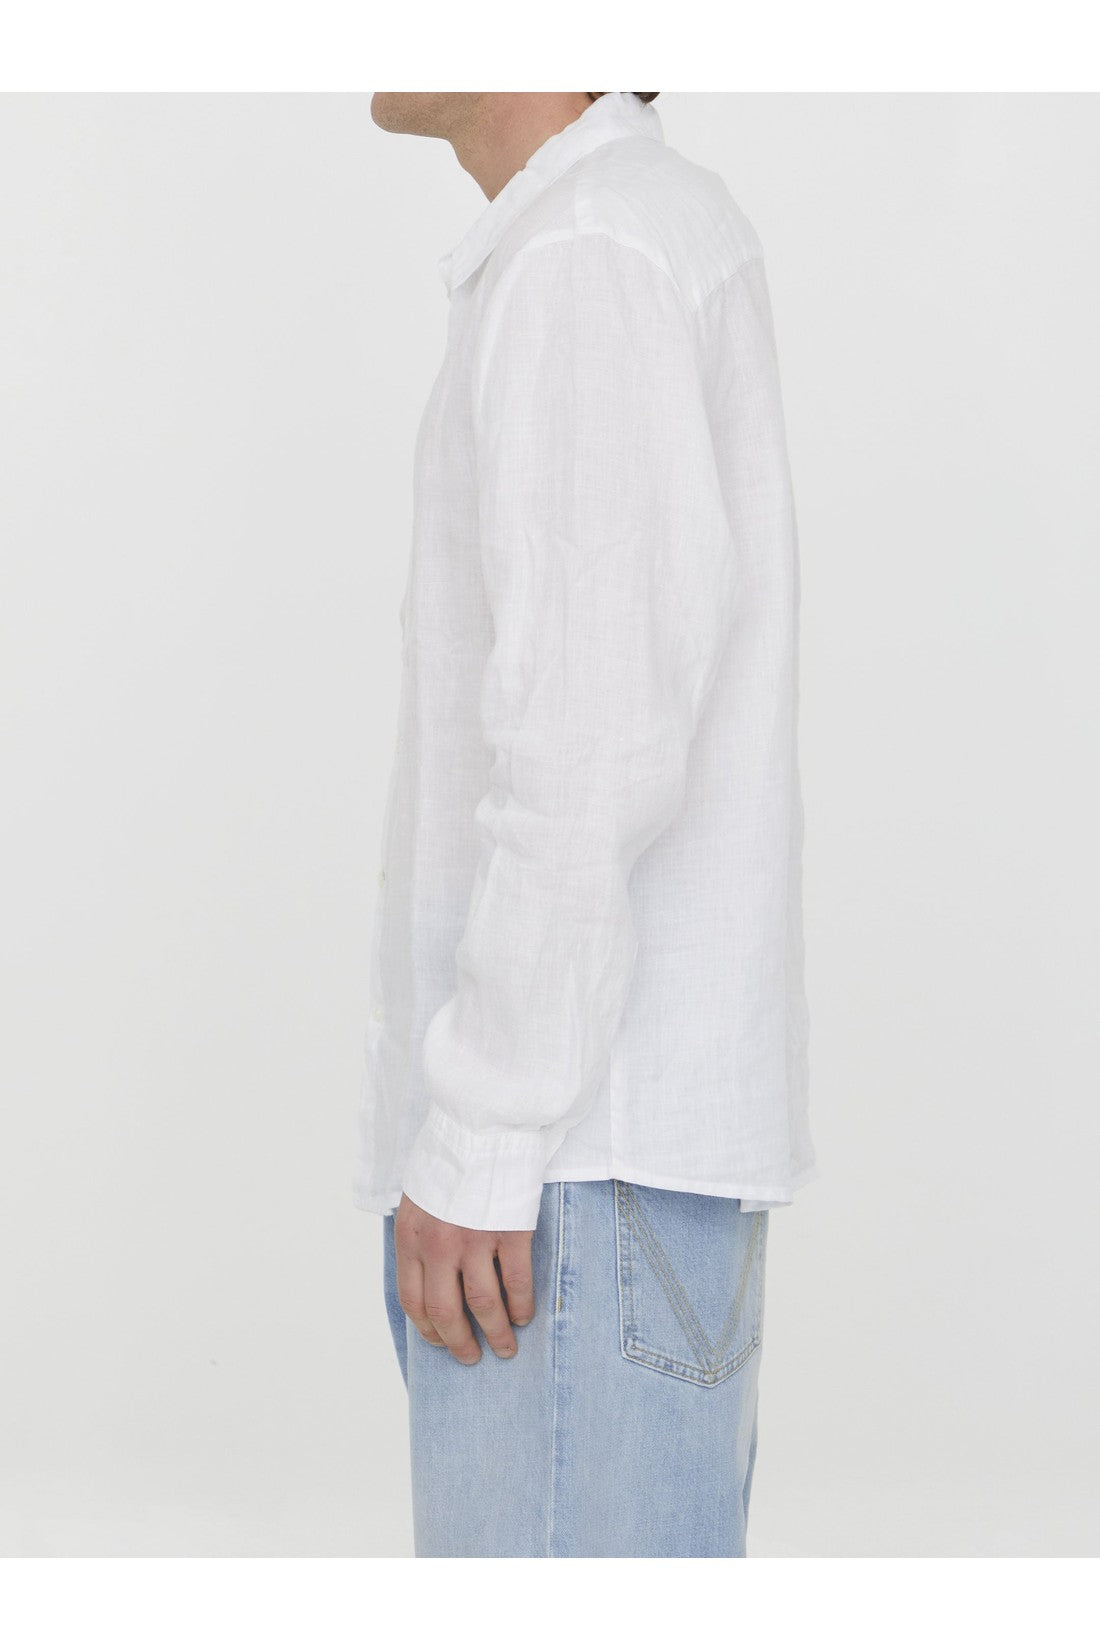 White linen shirt